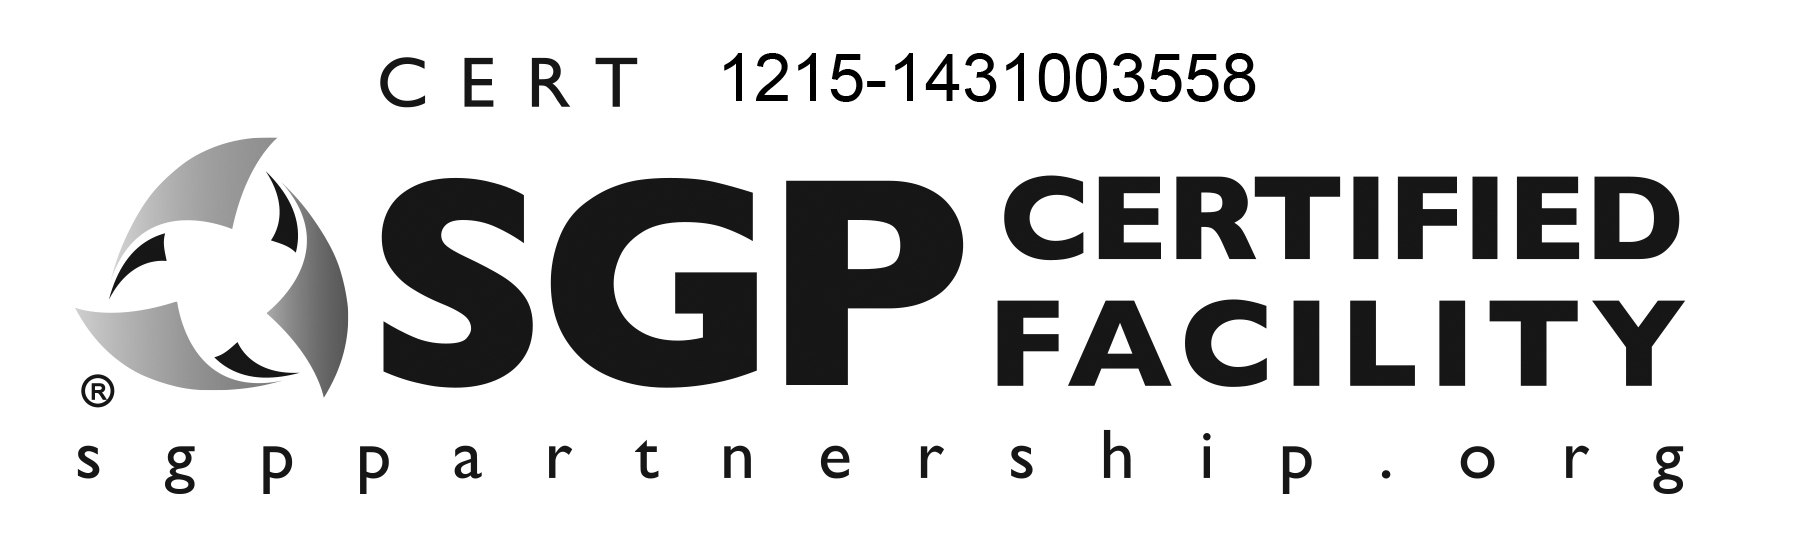 SGP Certified Facility w Cert # Logo B & W